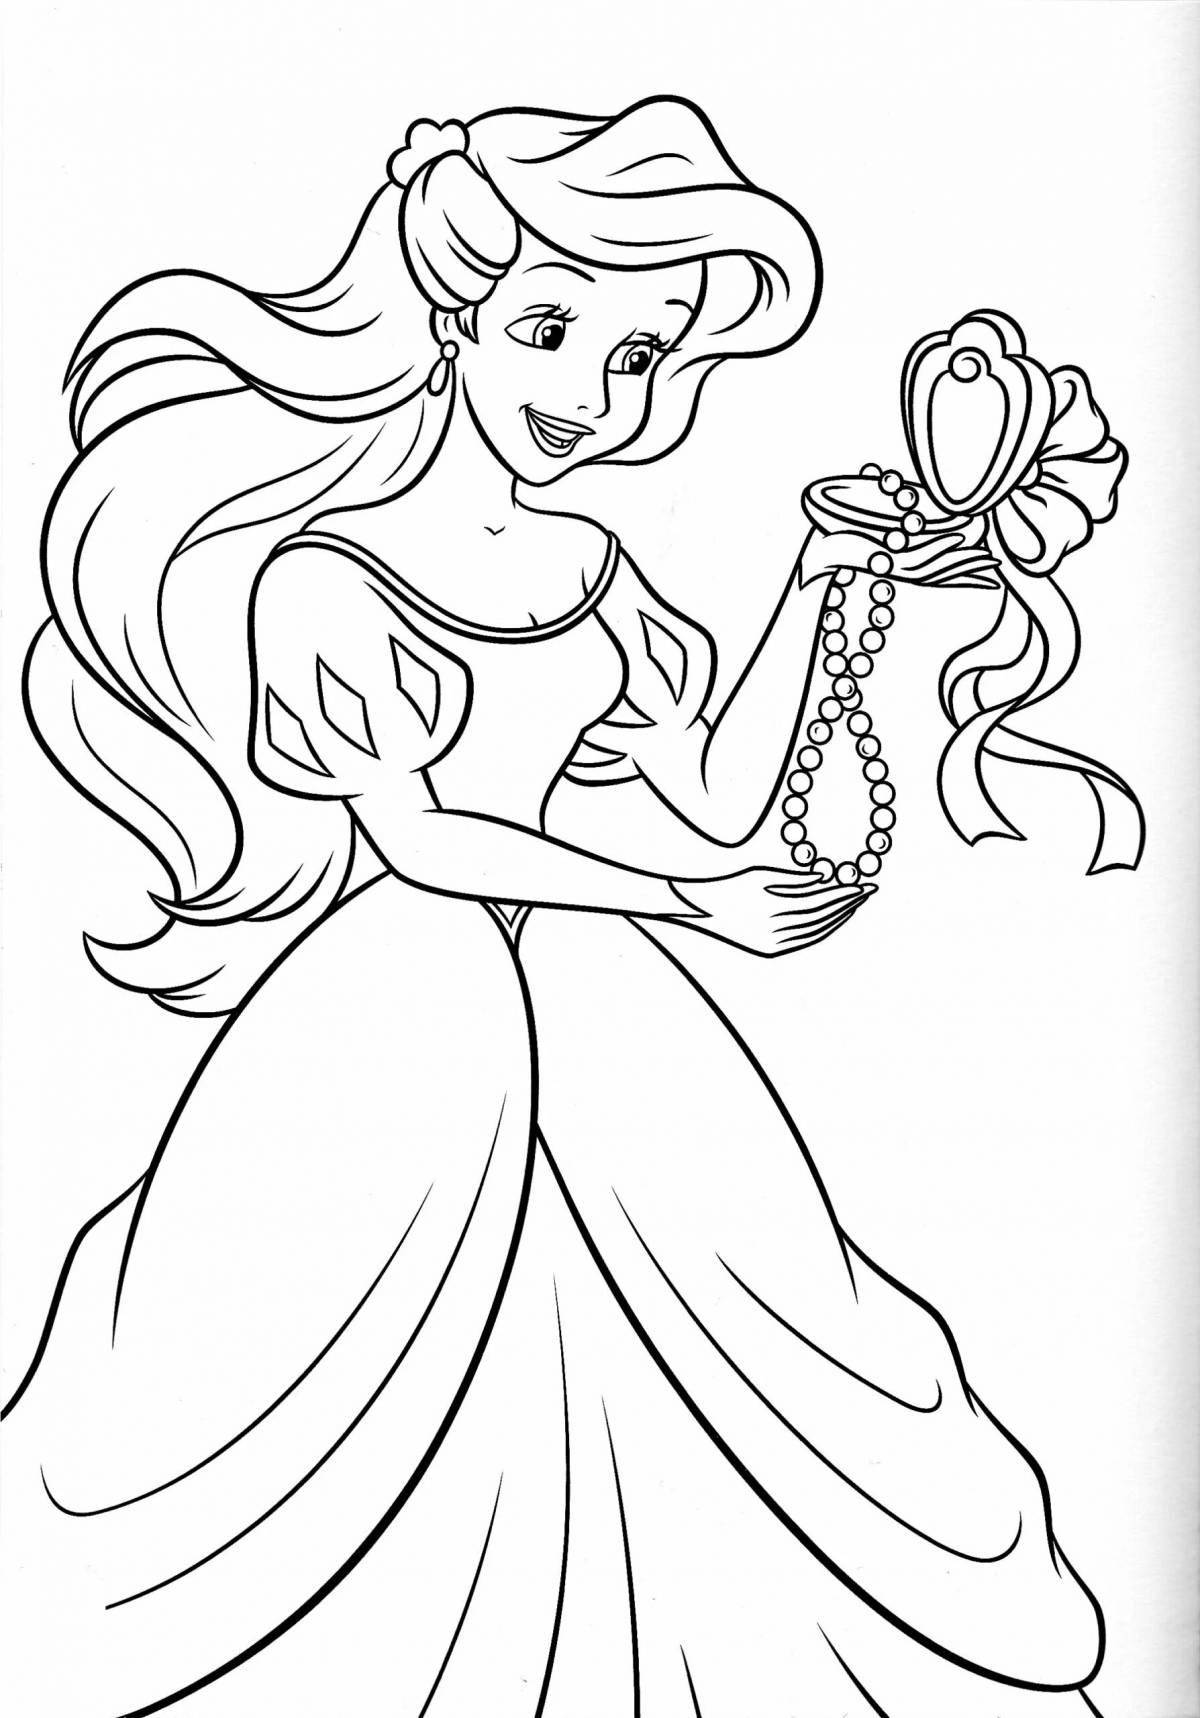 Dazzling princess coloring book